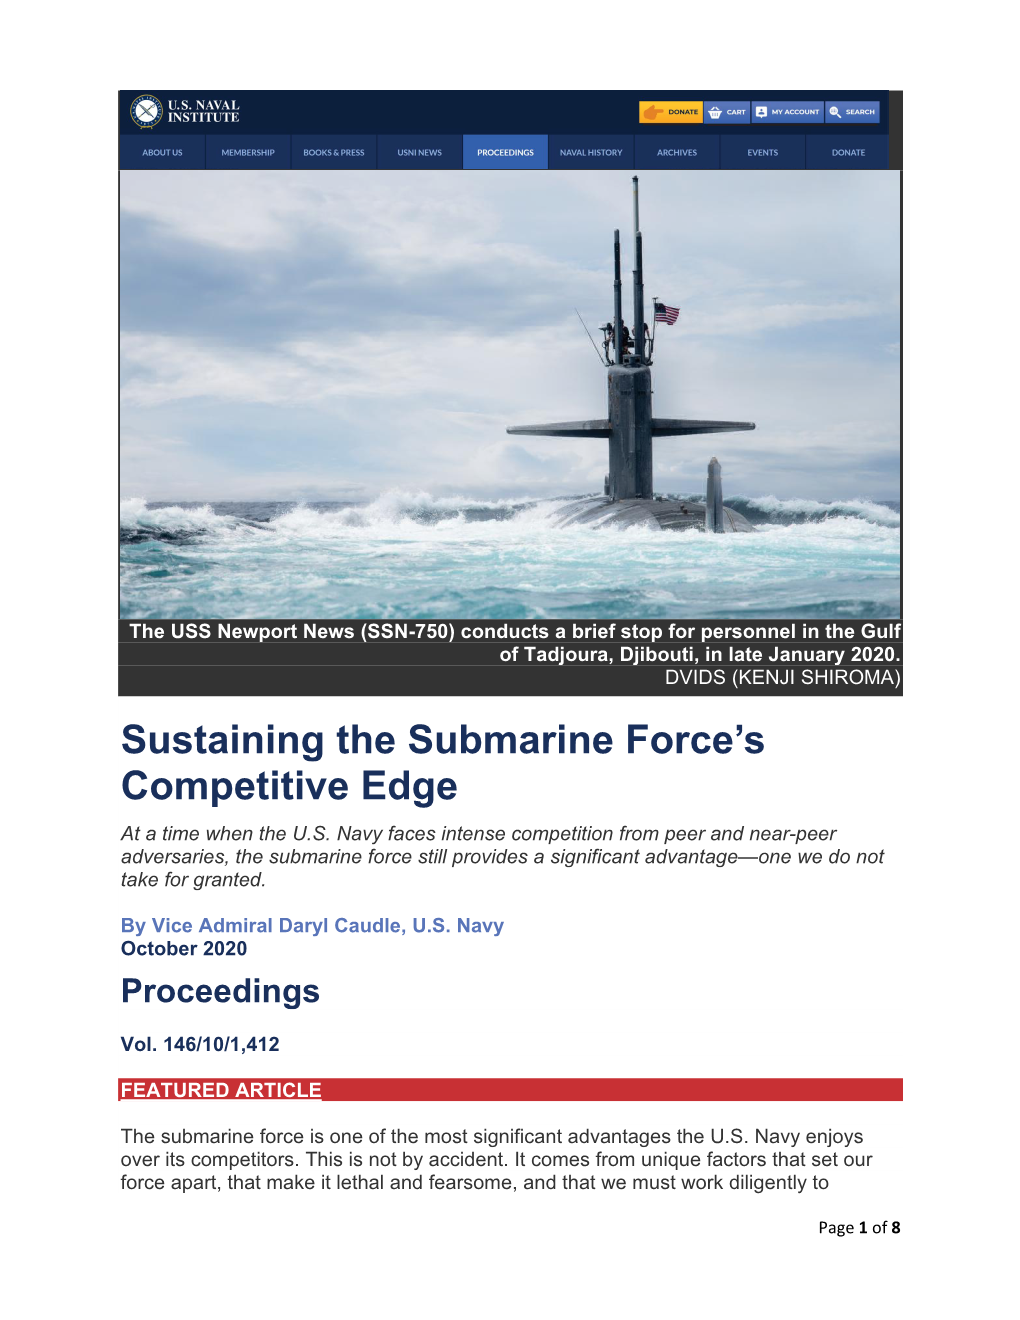 Sustaining the Submarine Force's Competitive Edge